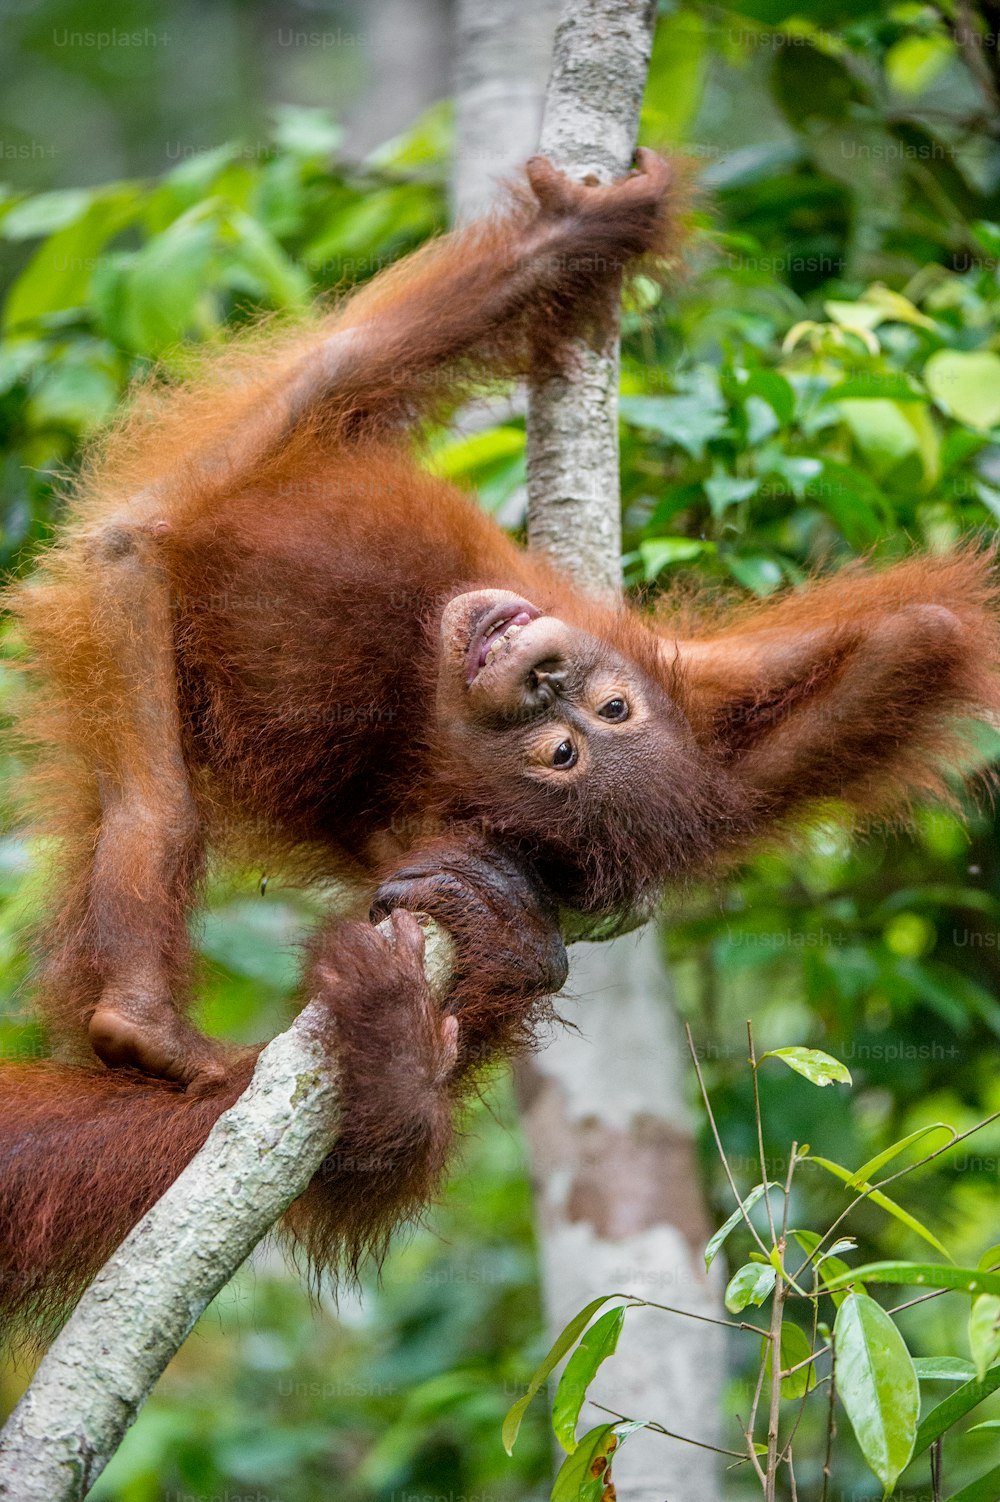 Filhote de orangotango em um habitat natural. Orangotango de Bornéu (Pongo pygmaeus wurmmbii) na natureza selvagem. Floresta tropical da ilha de Bornéu. Indonésia.